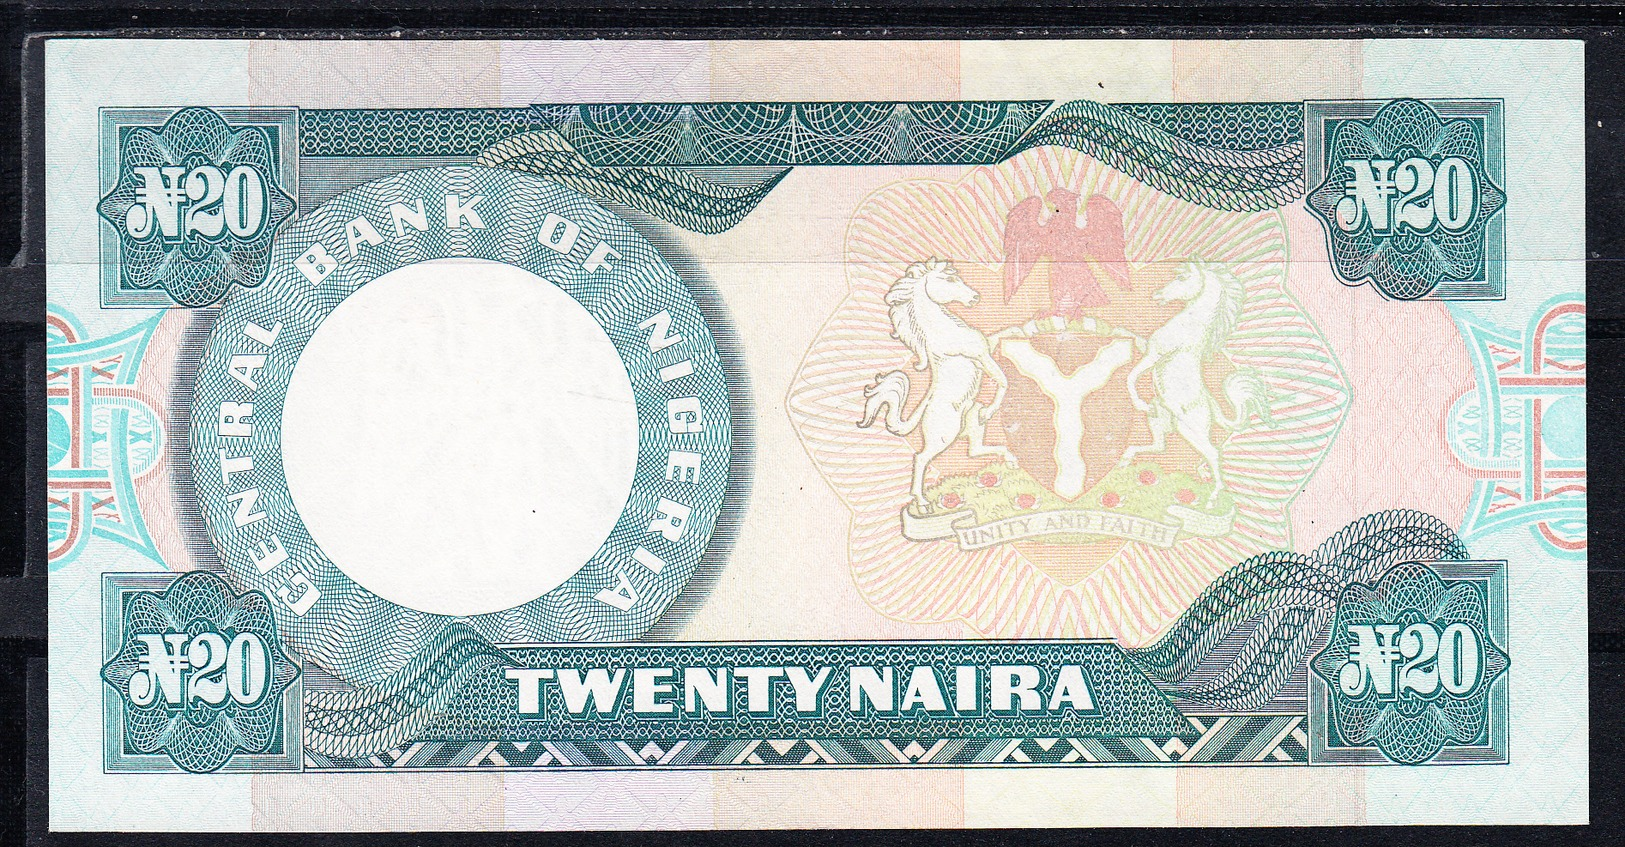 NIGERIA 2003. 20 NAIRA. GENERAL MURTALA R. MUHHAMED . NUEVO SIN CIRCULAR   .PICK 26   B1223 - Nigeria